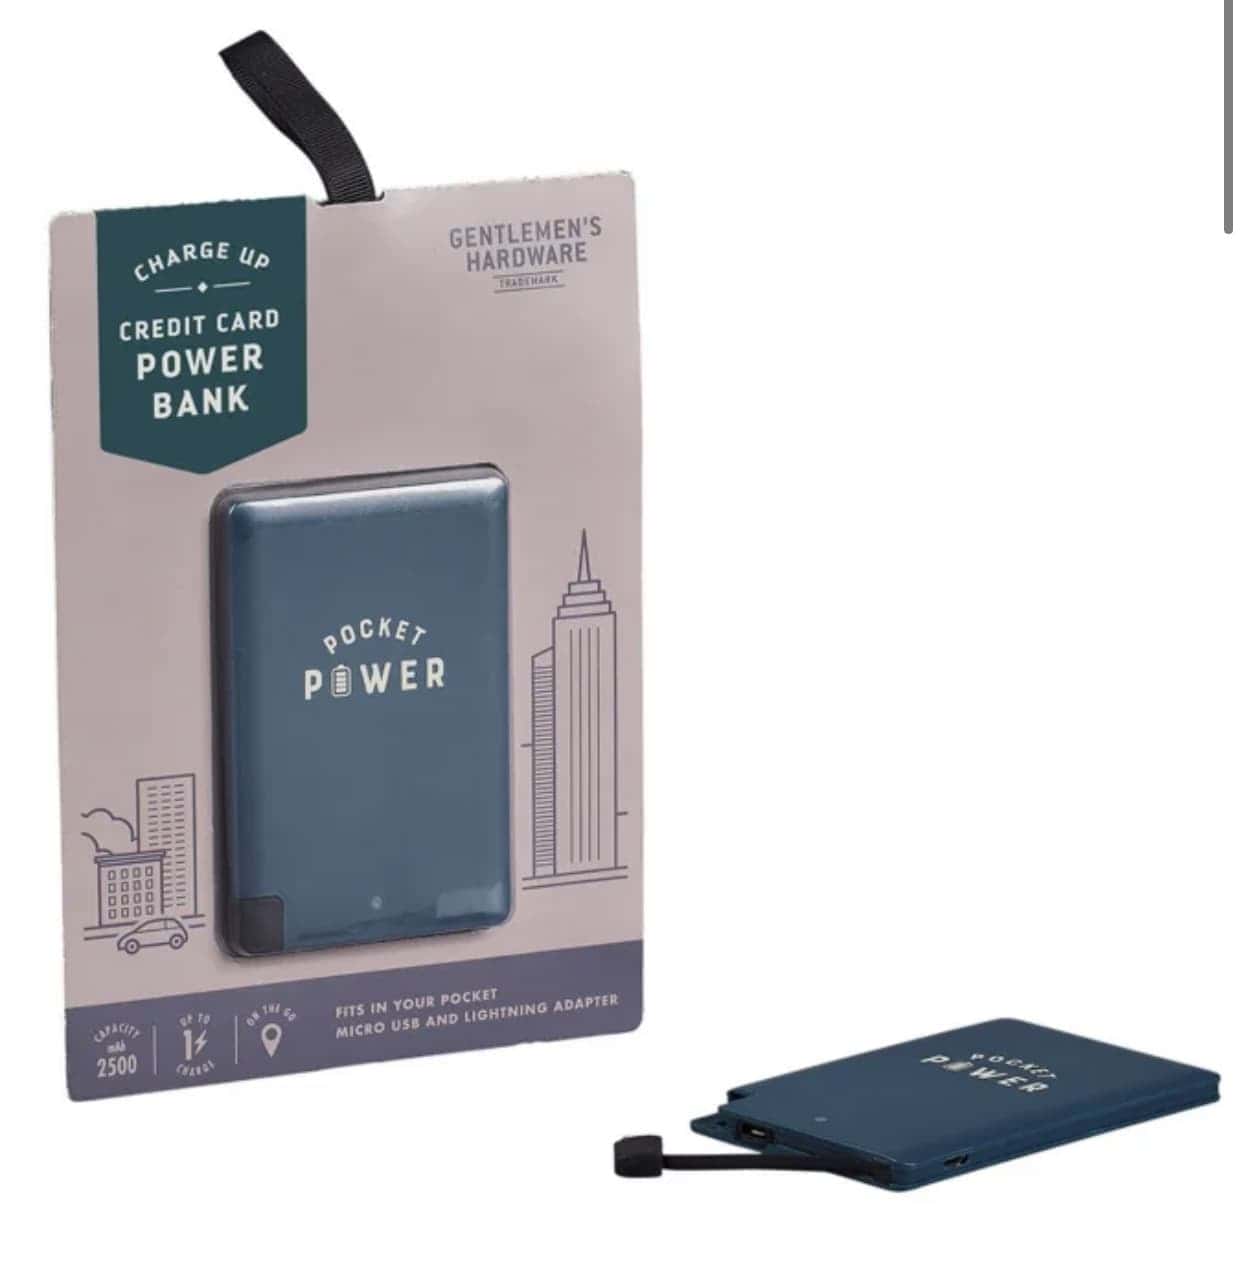 Credit Card Size Power Bank by Gentlemen's Hardware